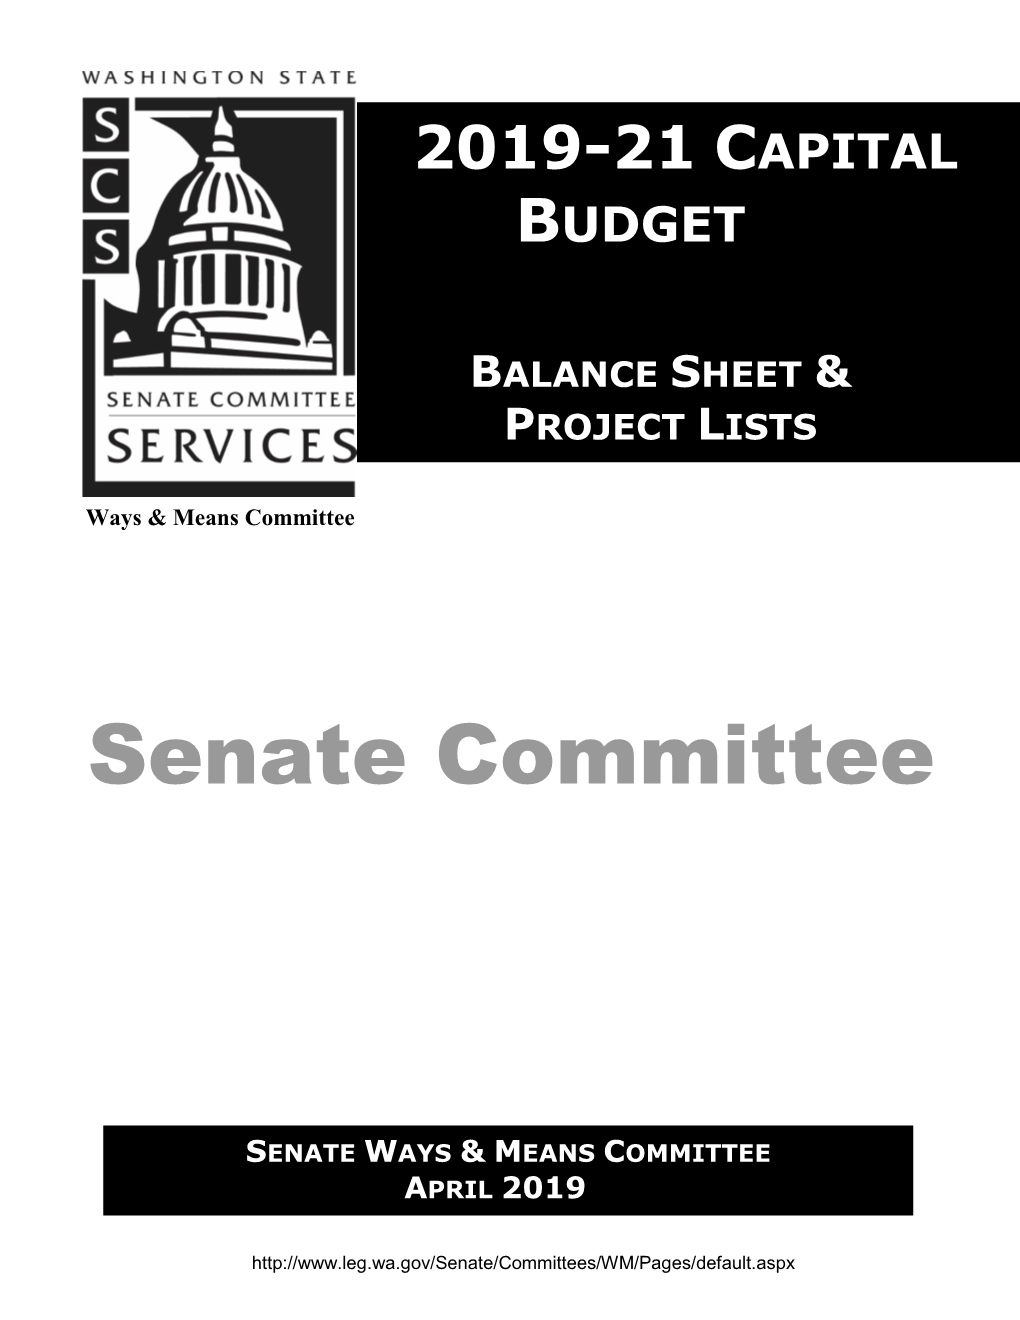 Senate Committee